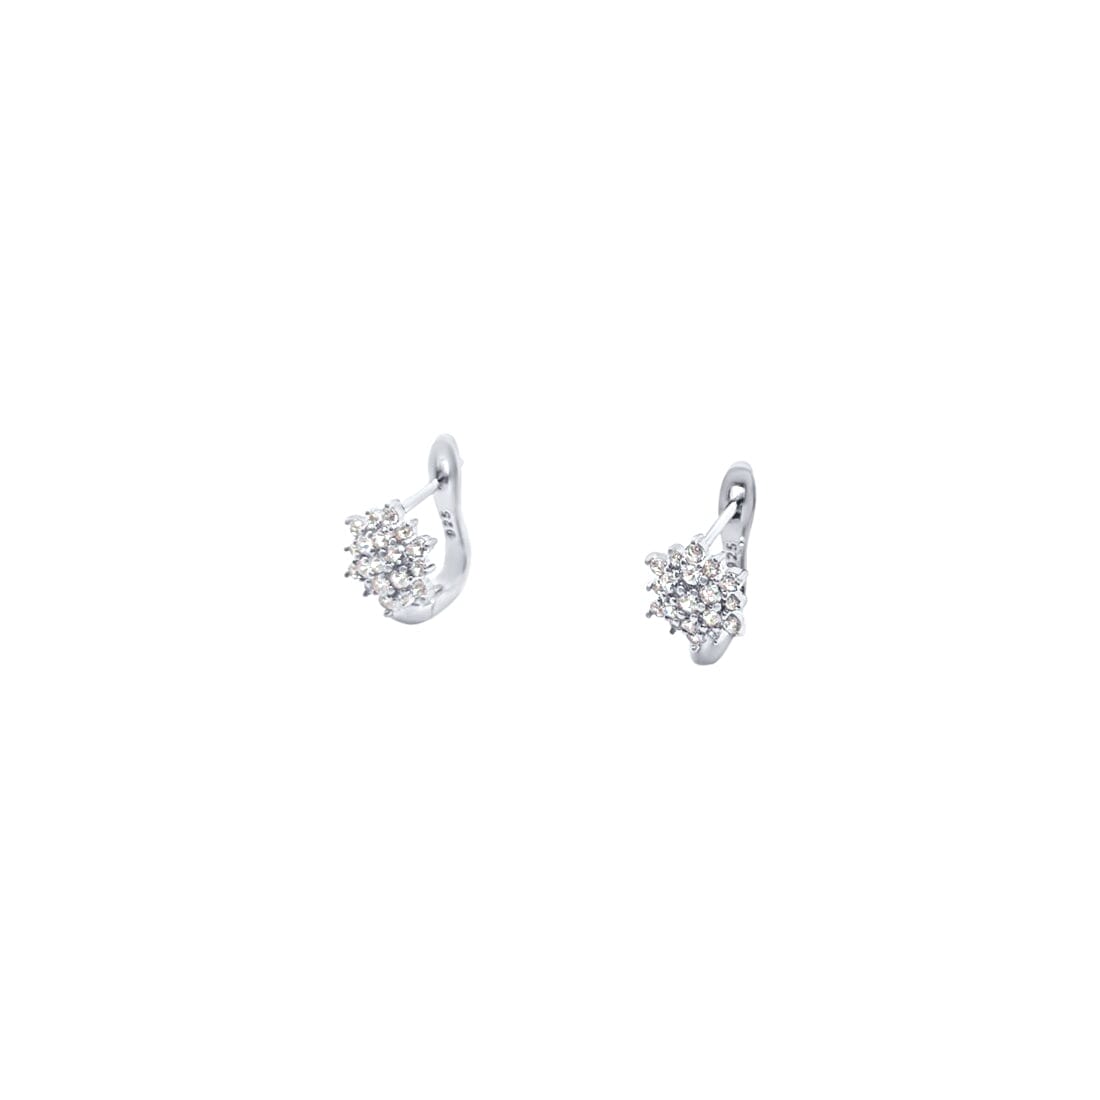 Flower Cluster Stud Earrings with Cubic Zirconia in Sterling Silver Earrings Bevilles 